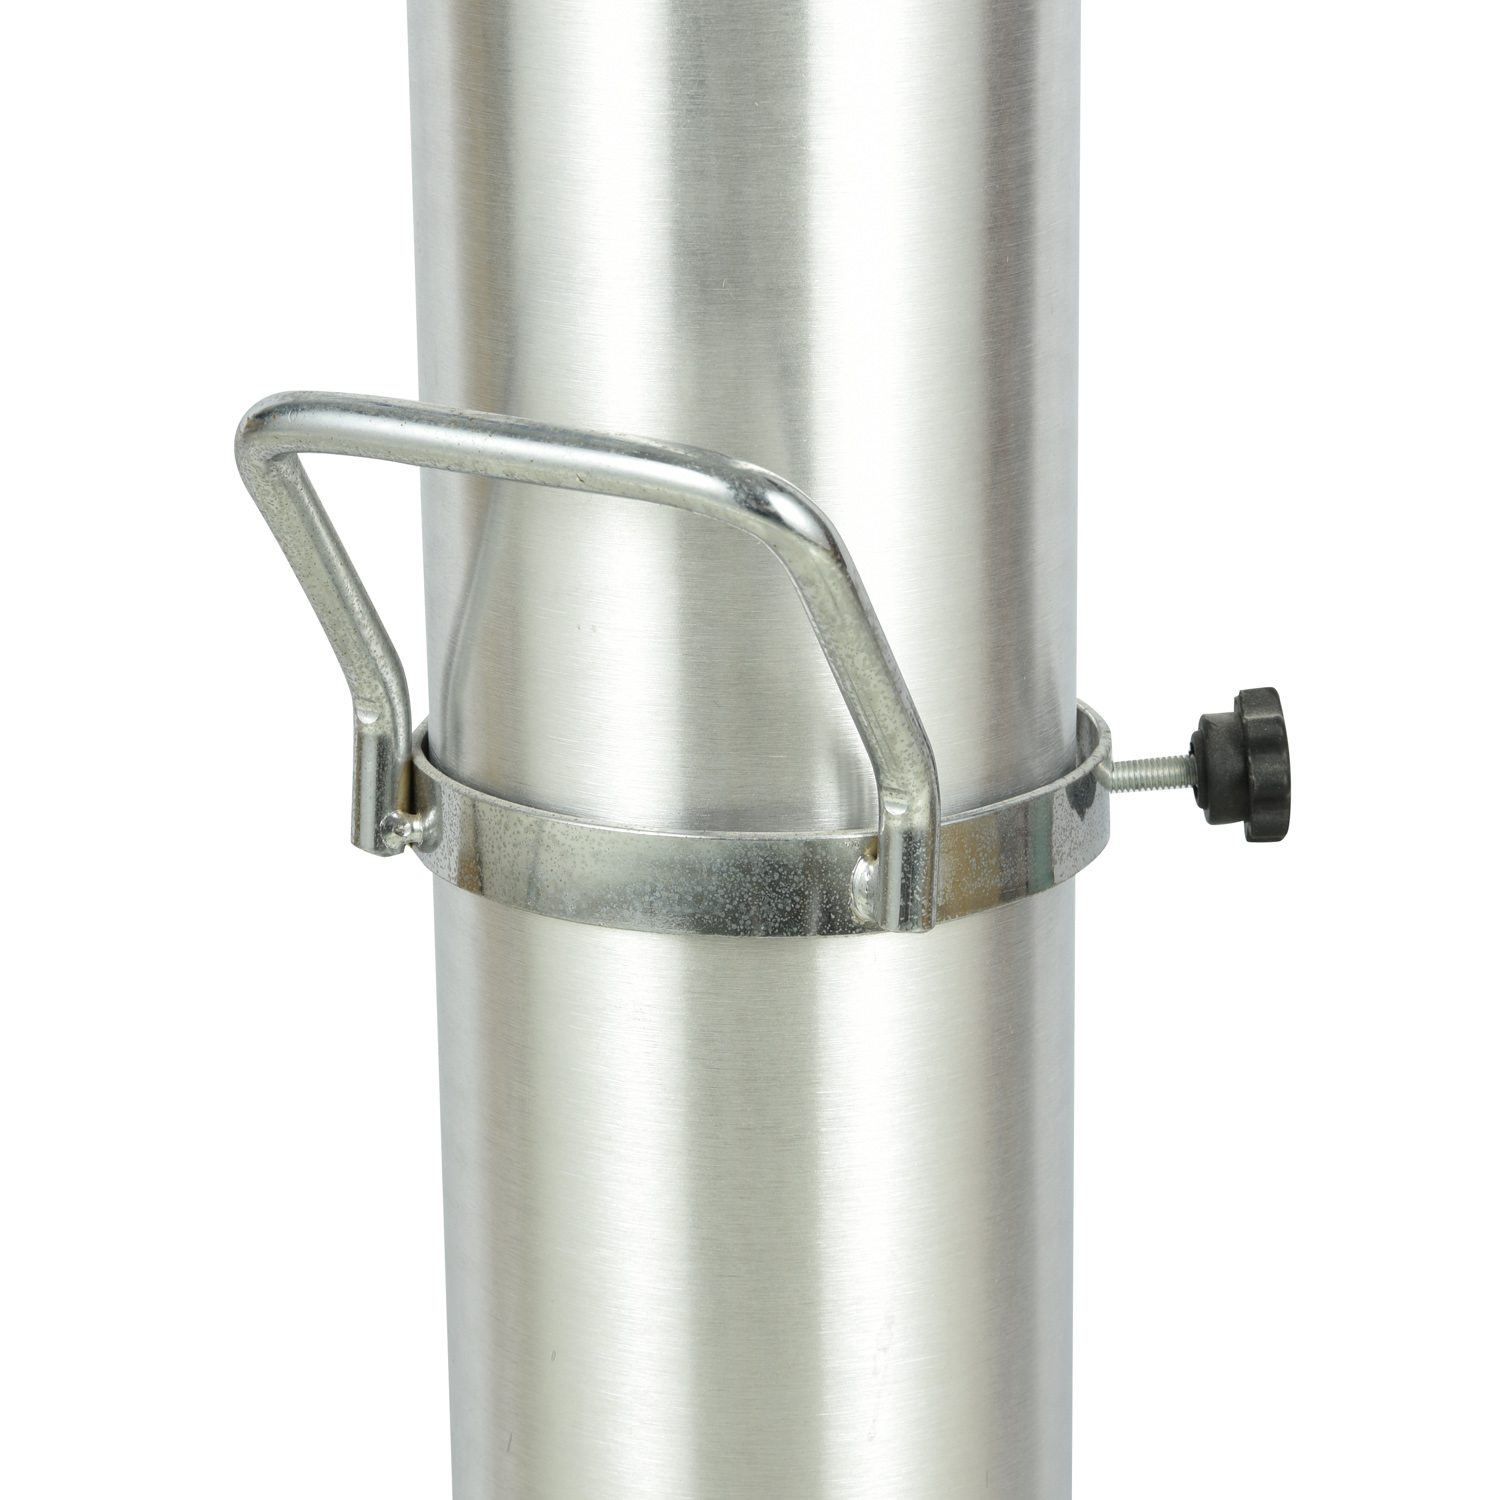 4.6l Oxygen Aluminum Cylinder